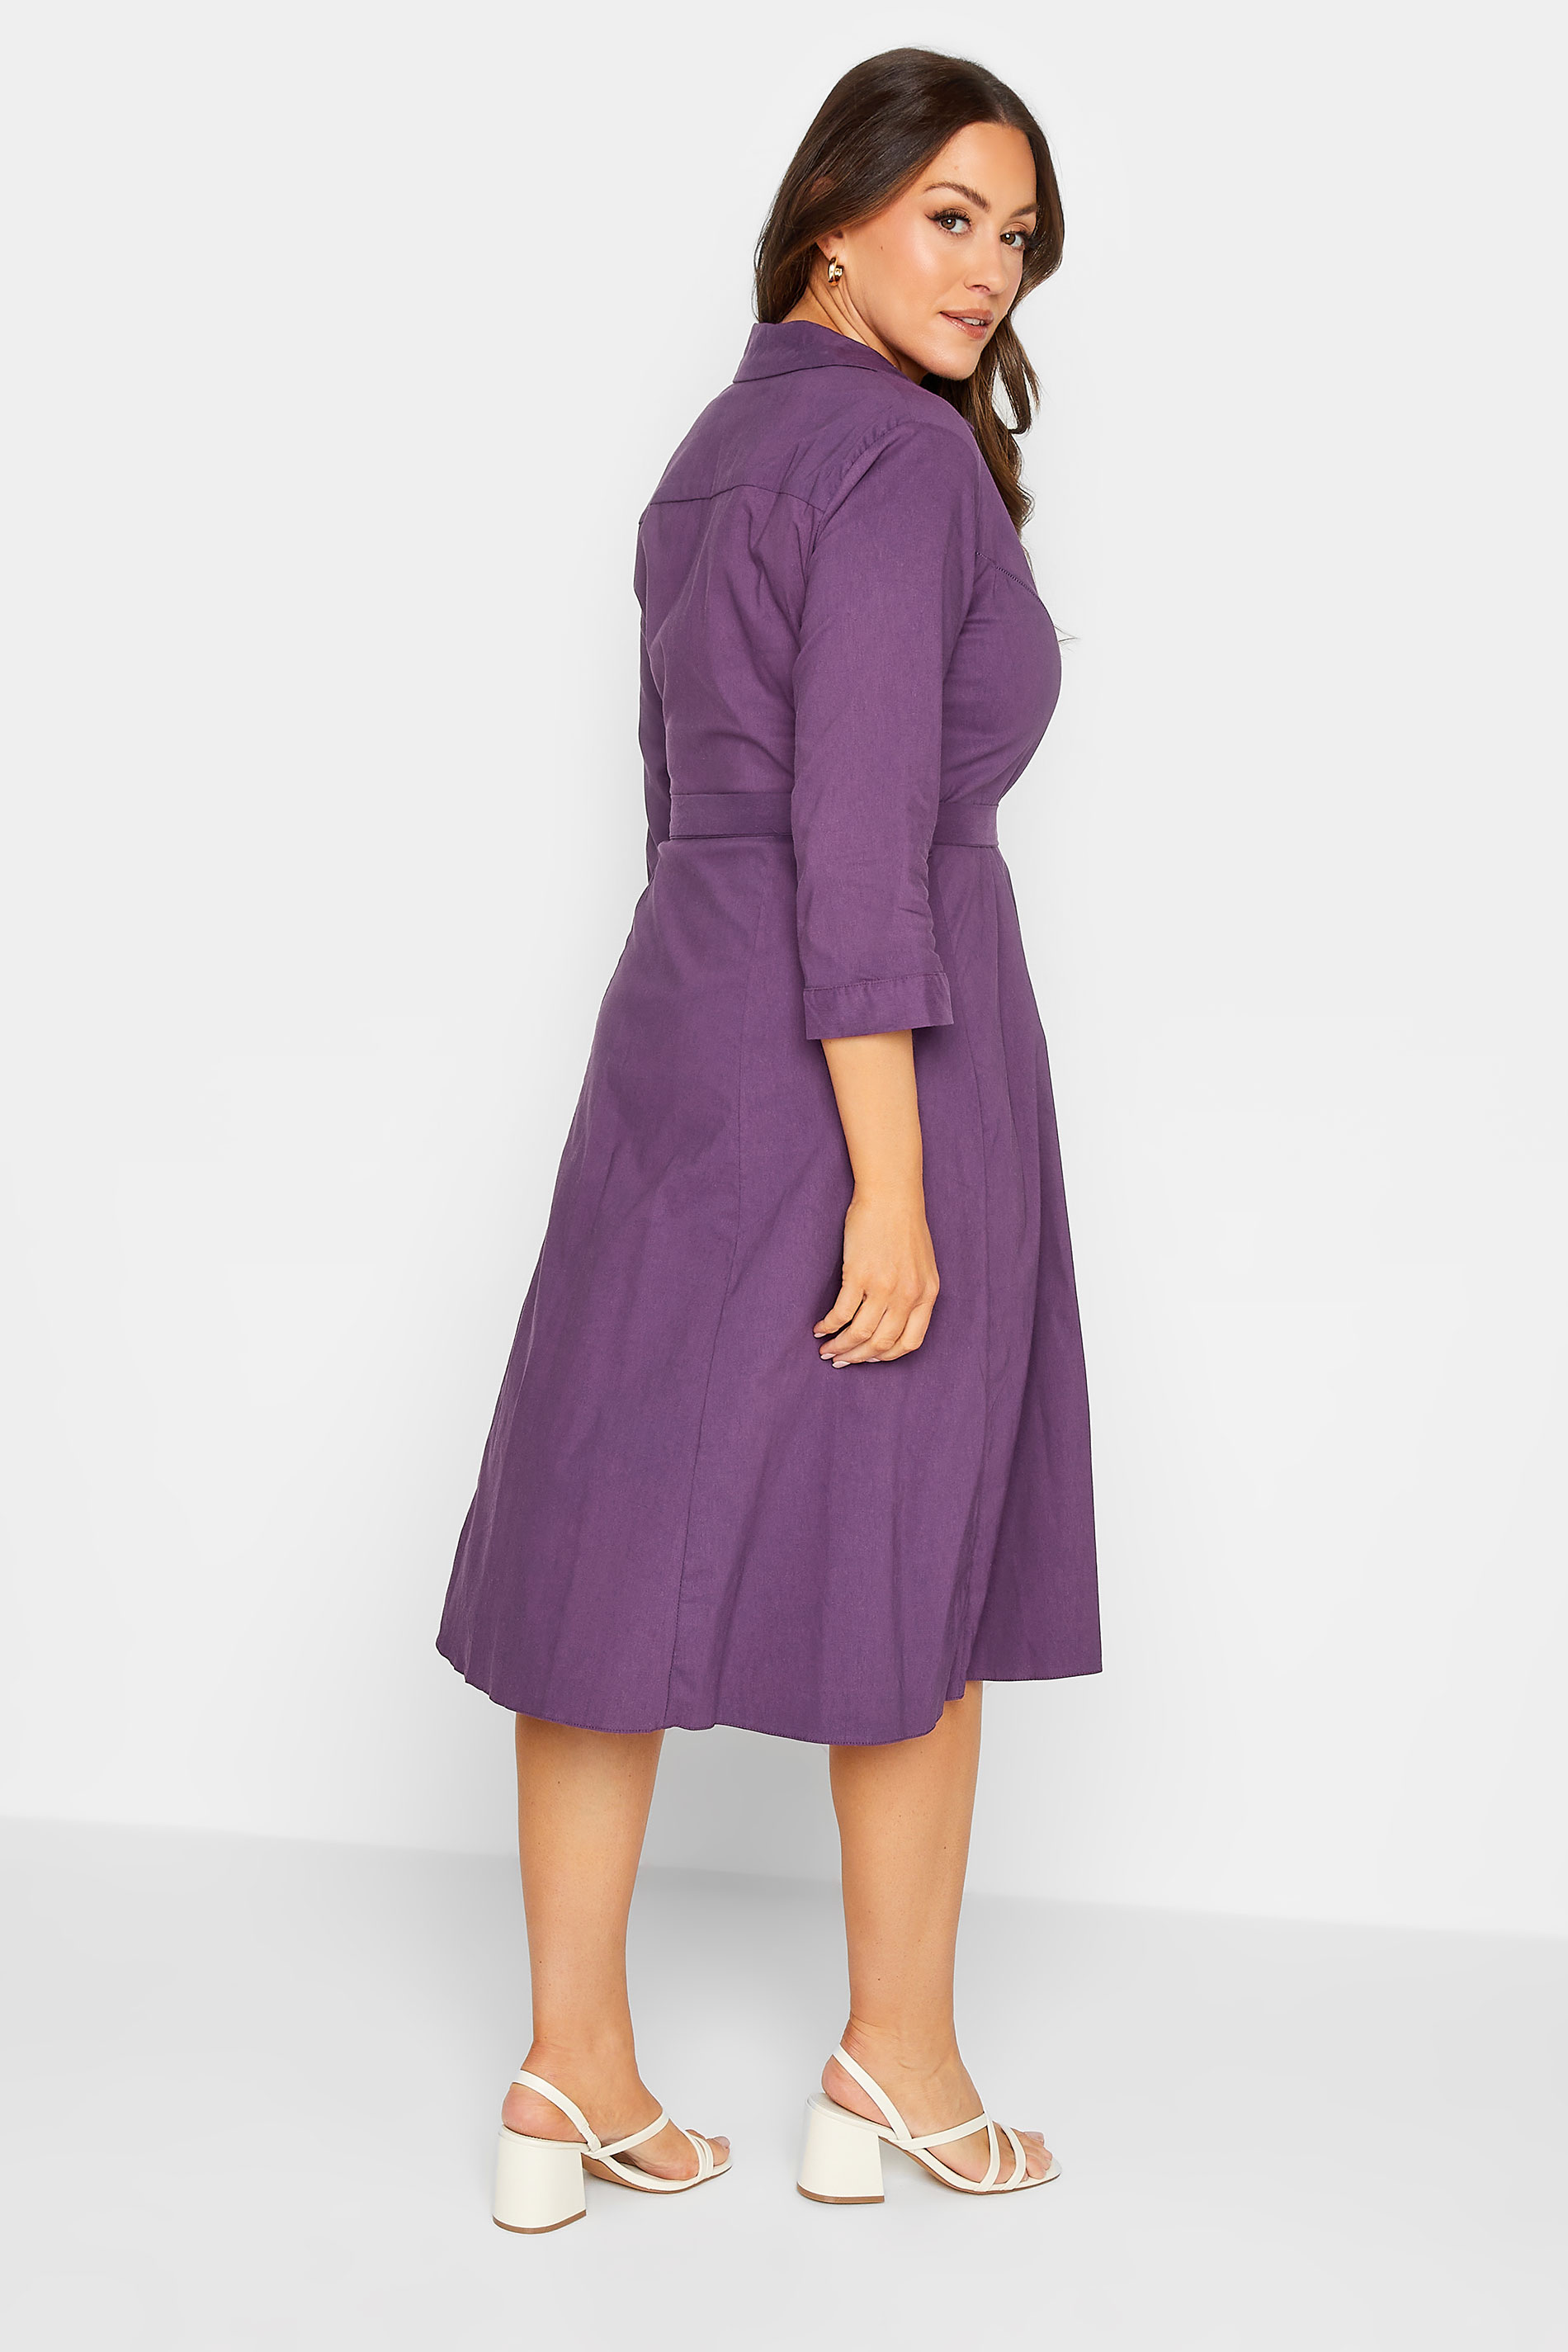 M&Co Purple Tie Waist Shirt Dress | M&Co 3